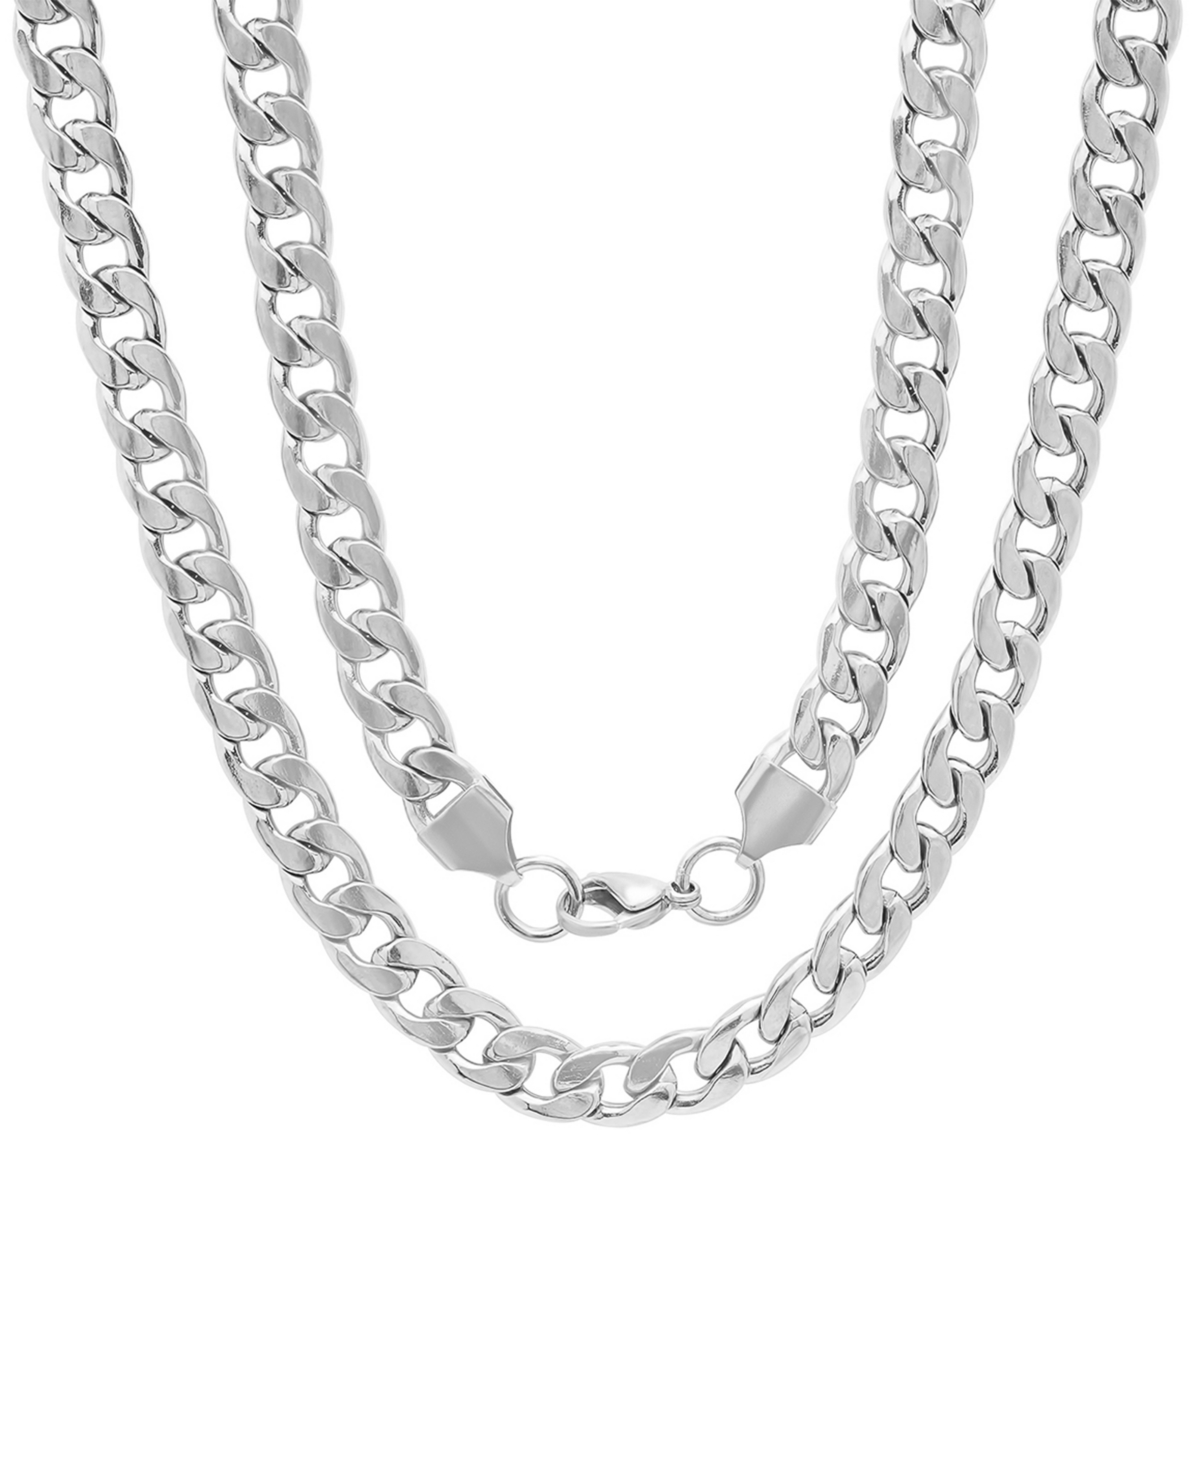 Shop Steeltime Men's Silver-tone Curb Chain Necklace, 24"